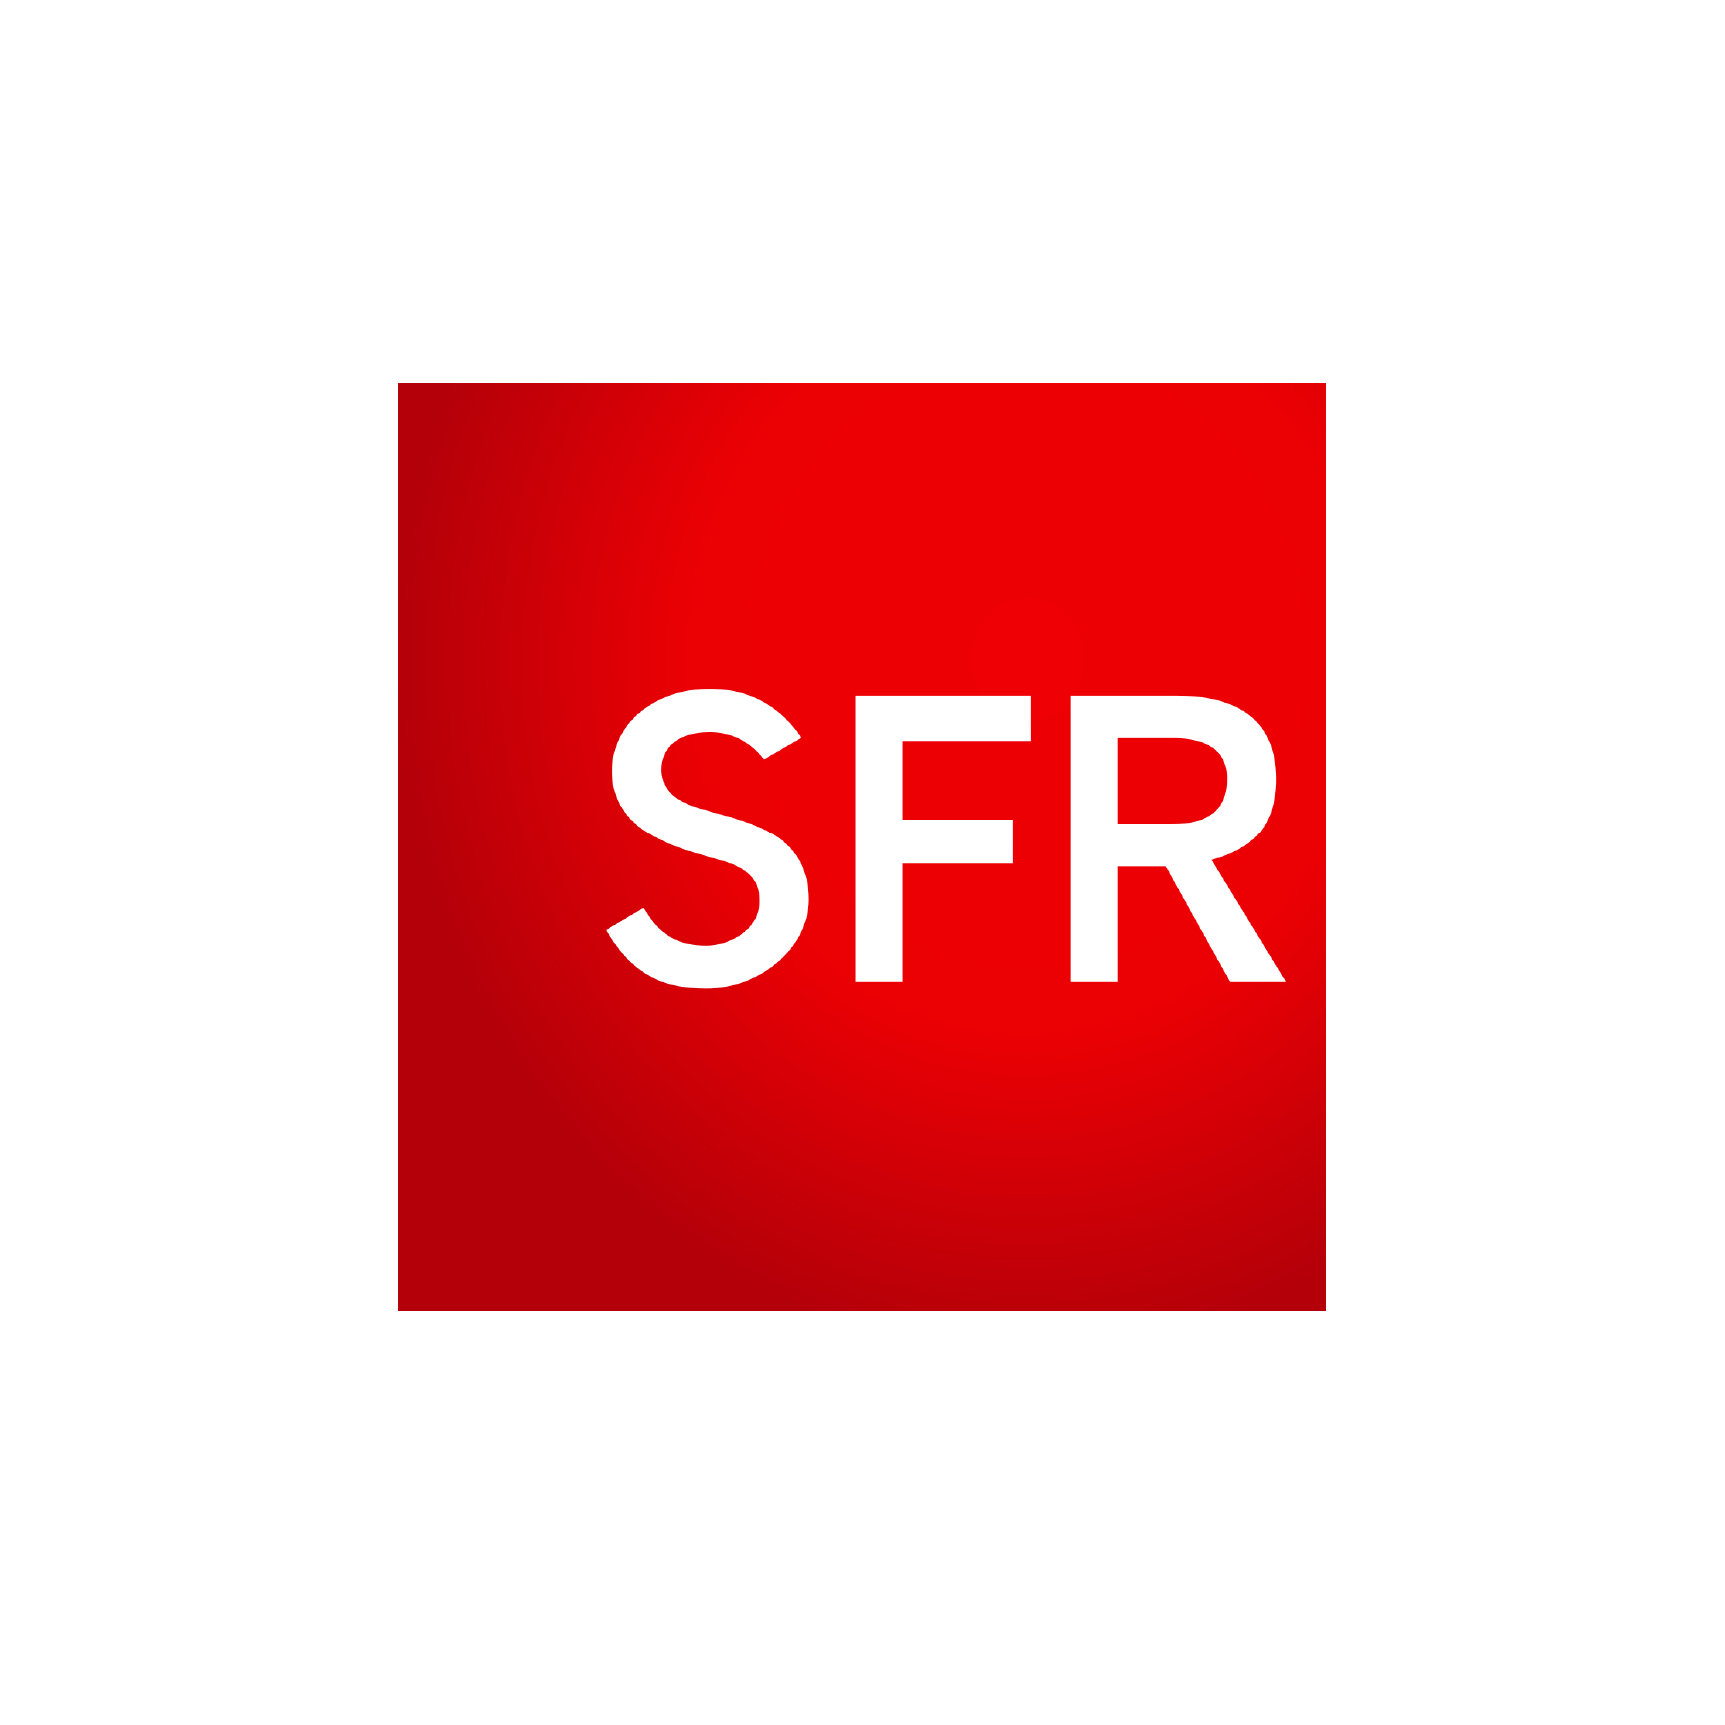 SFR. BT лого. СФР логотип. Логотип СФР вектор. Сфр ру кабинет